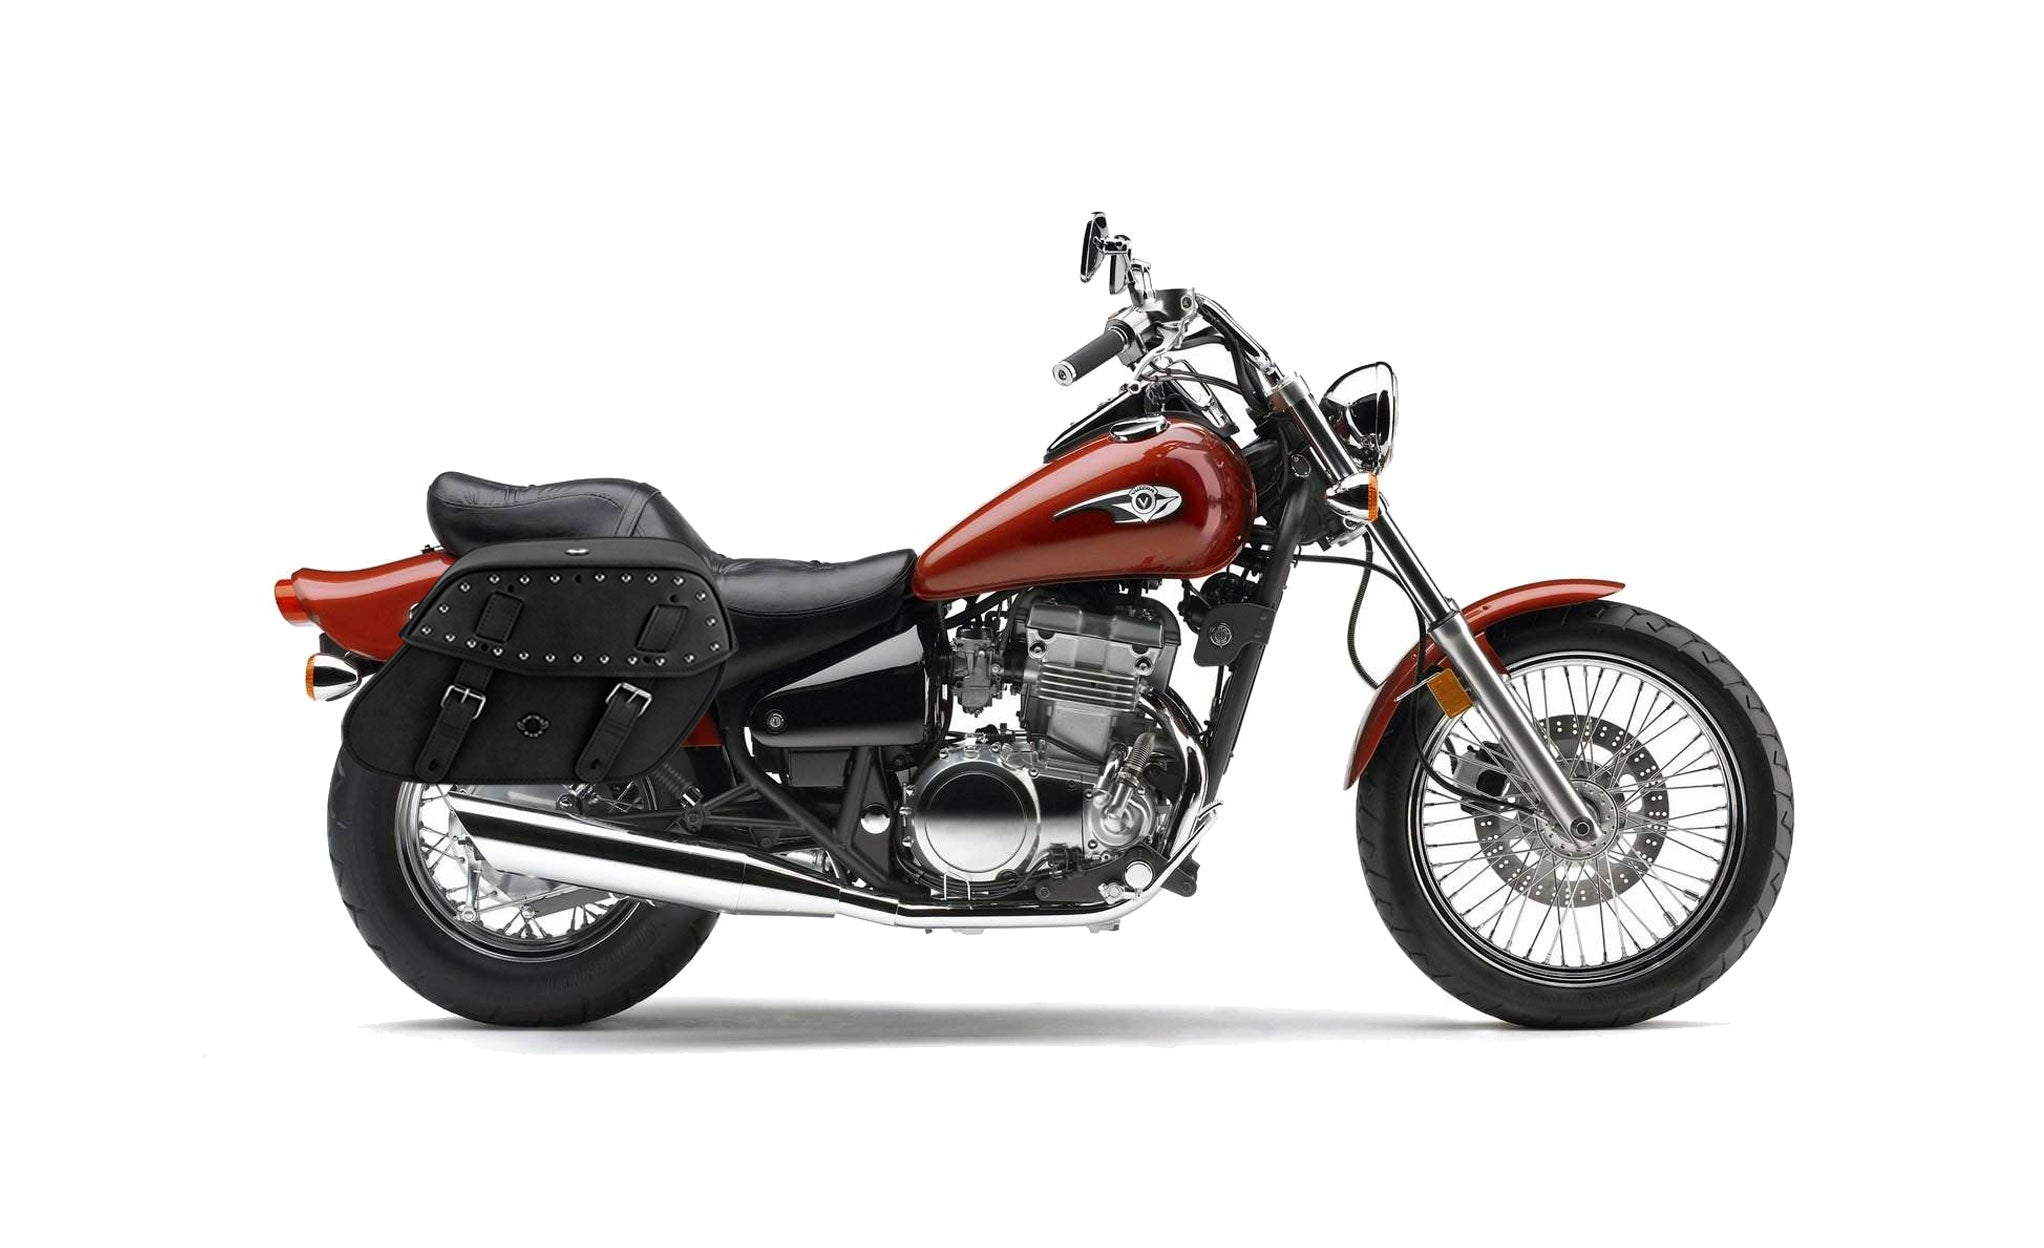 Viking Odin Large Kawasaki Vulcan 500 En500 Studded Leather Motorcycle Saddlebags on Bike Photo @expand